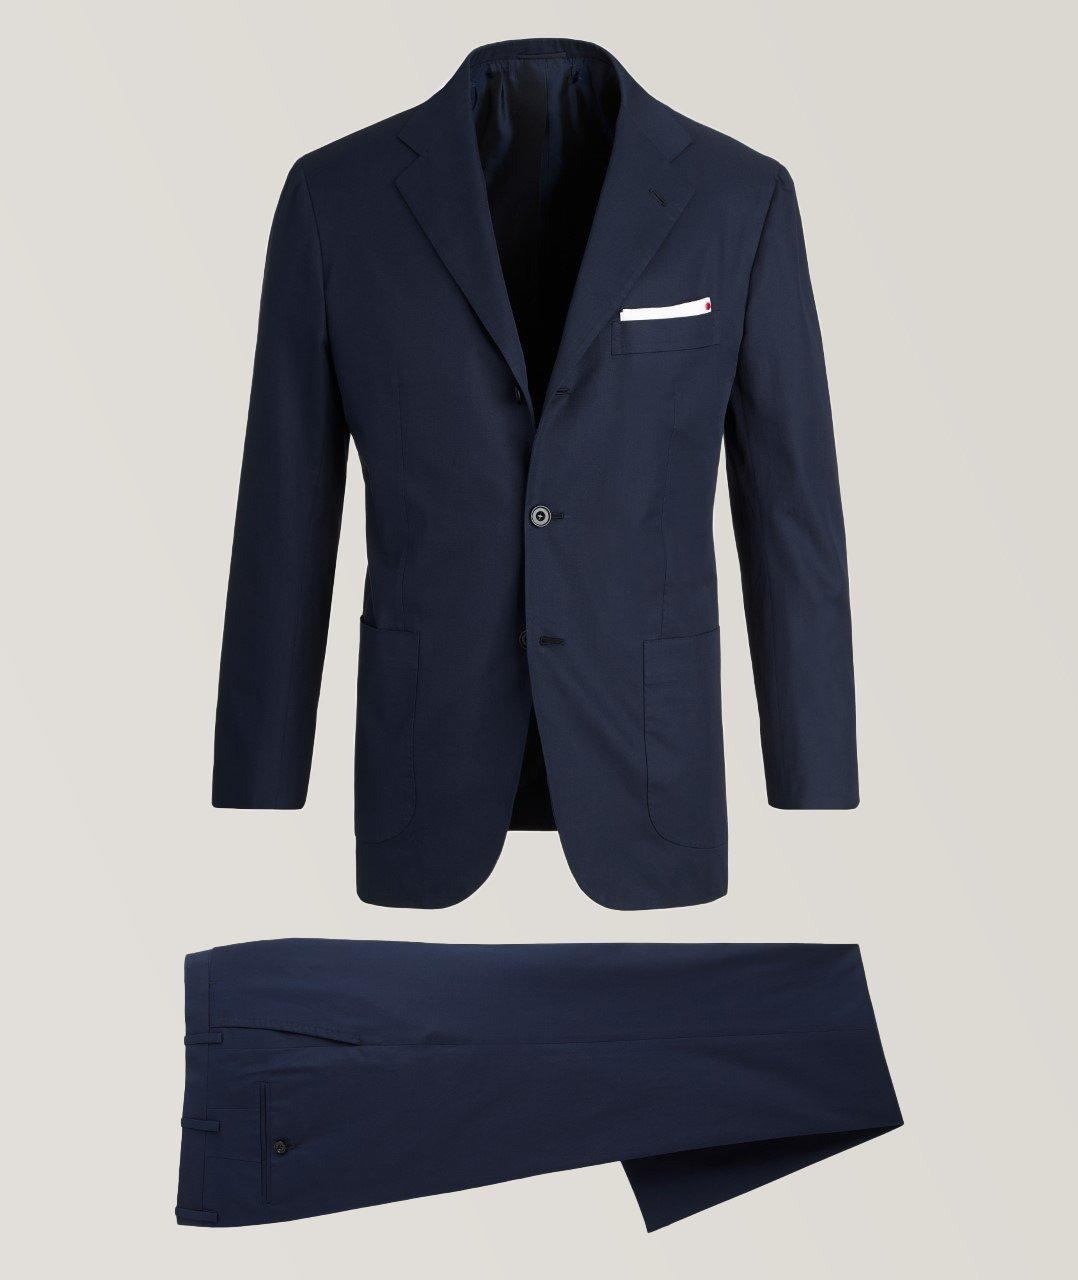 Kiton Solid Cotton Twill Suit